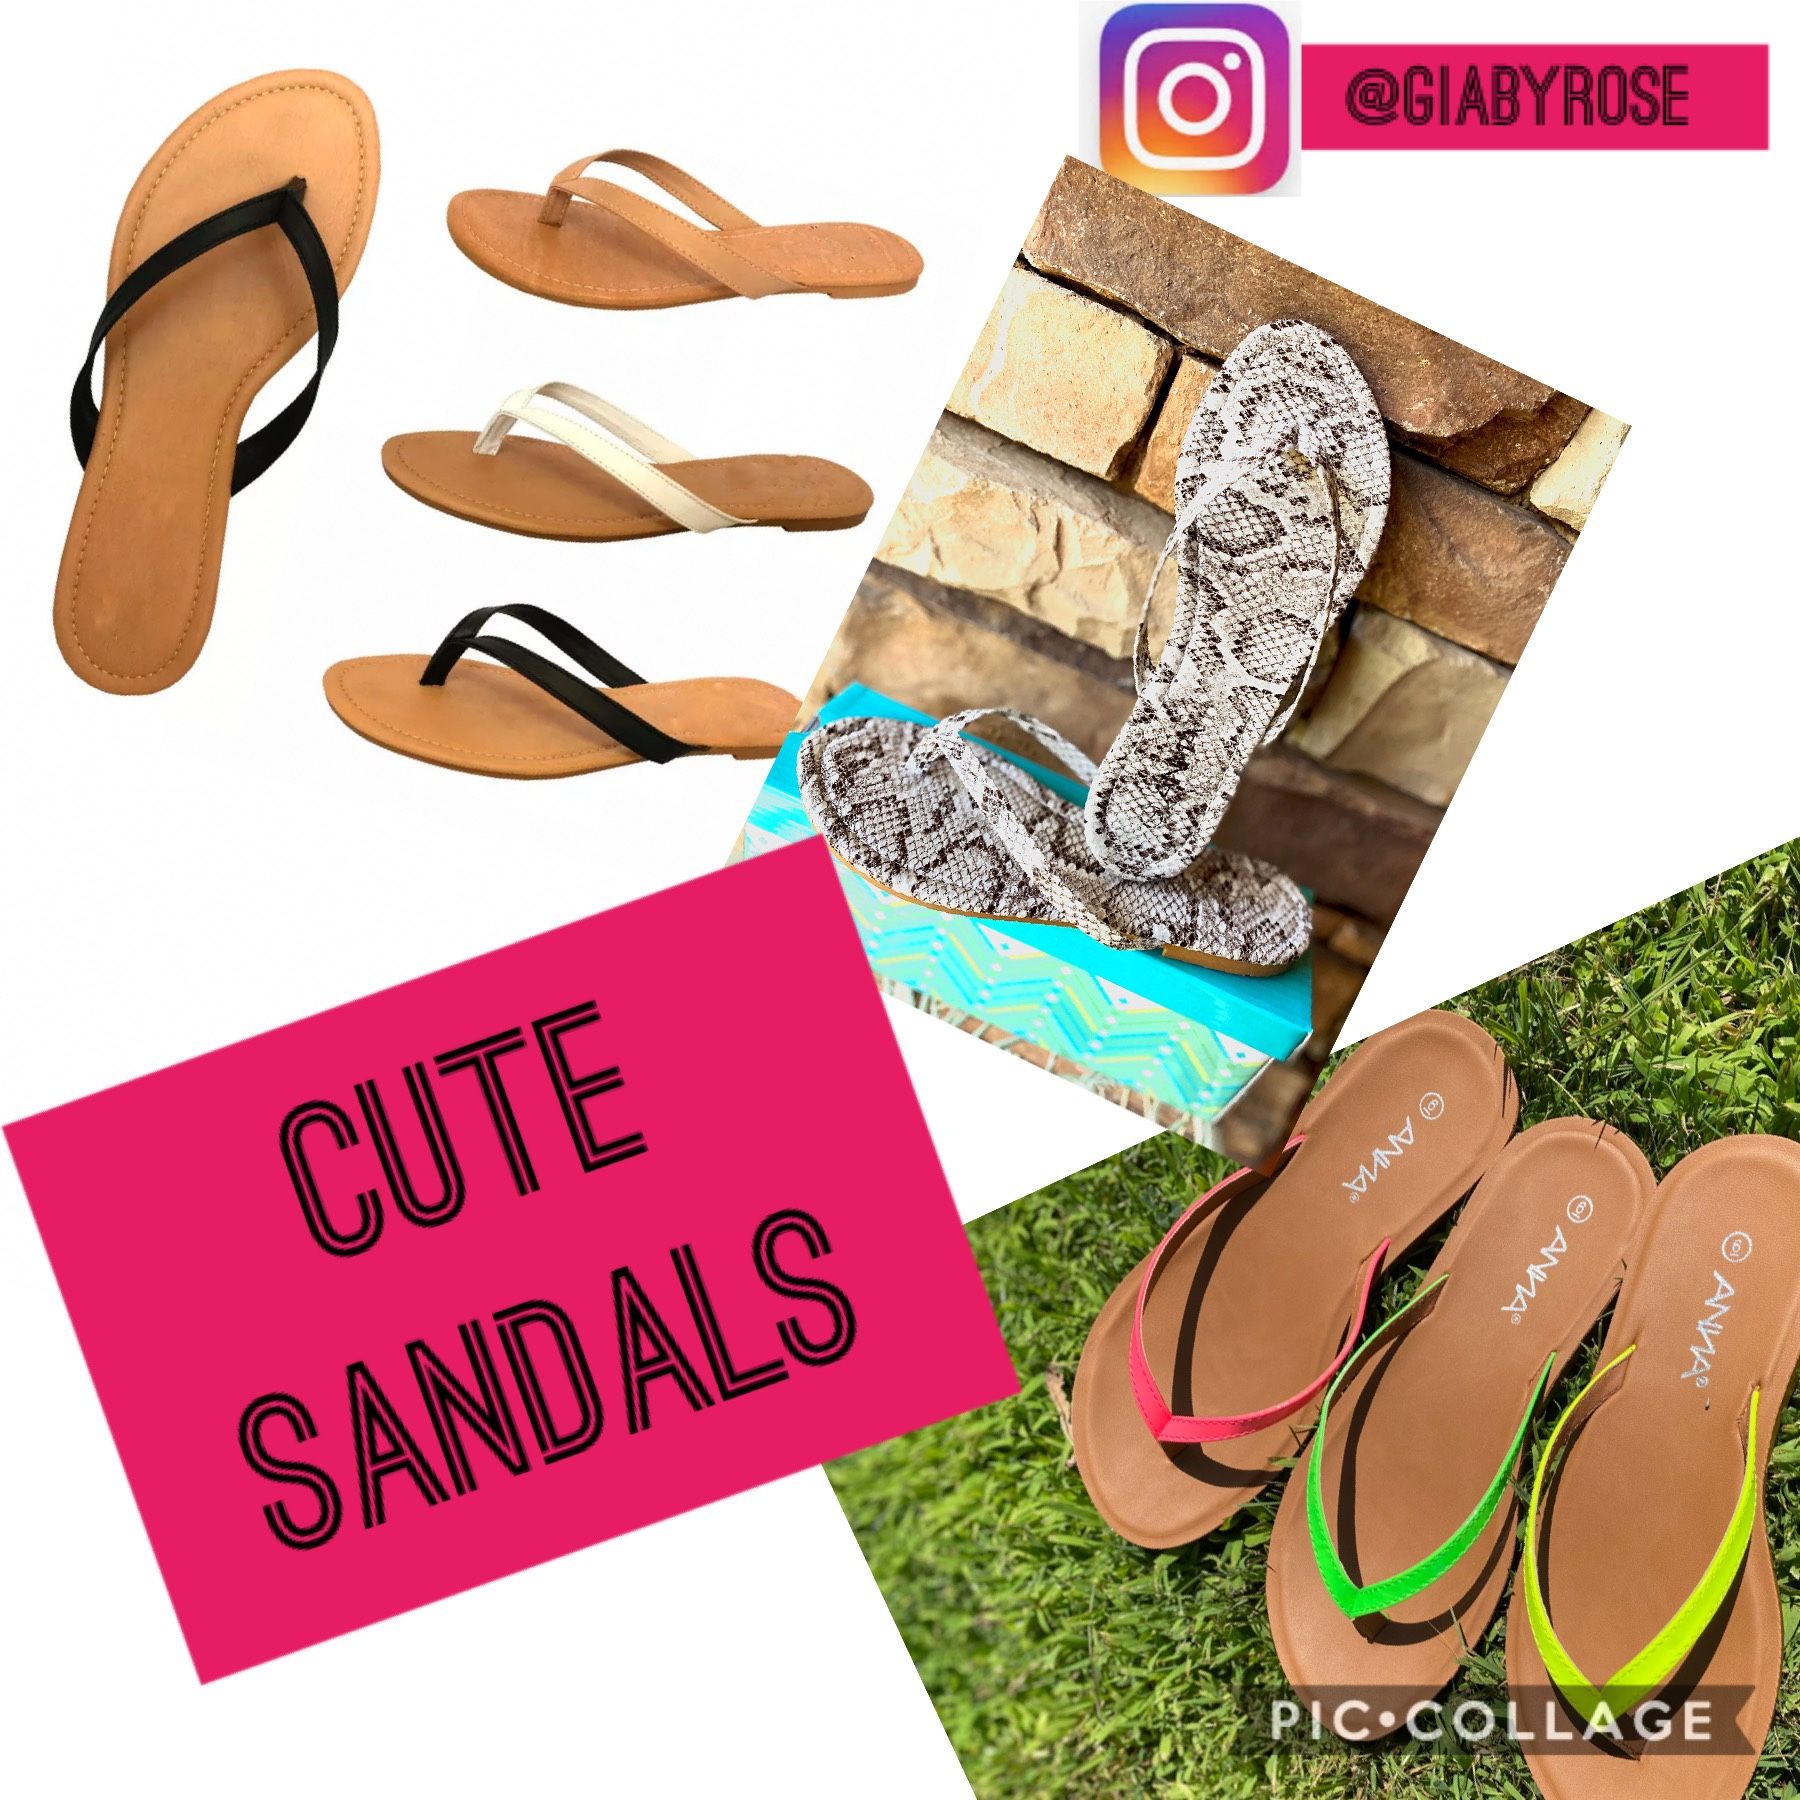 NEW Sandals (flipflops)